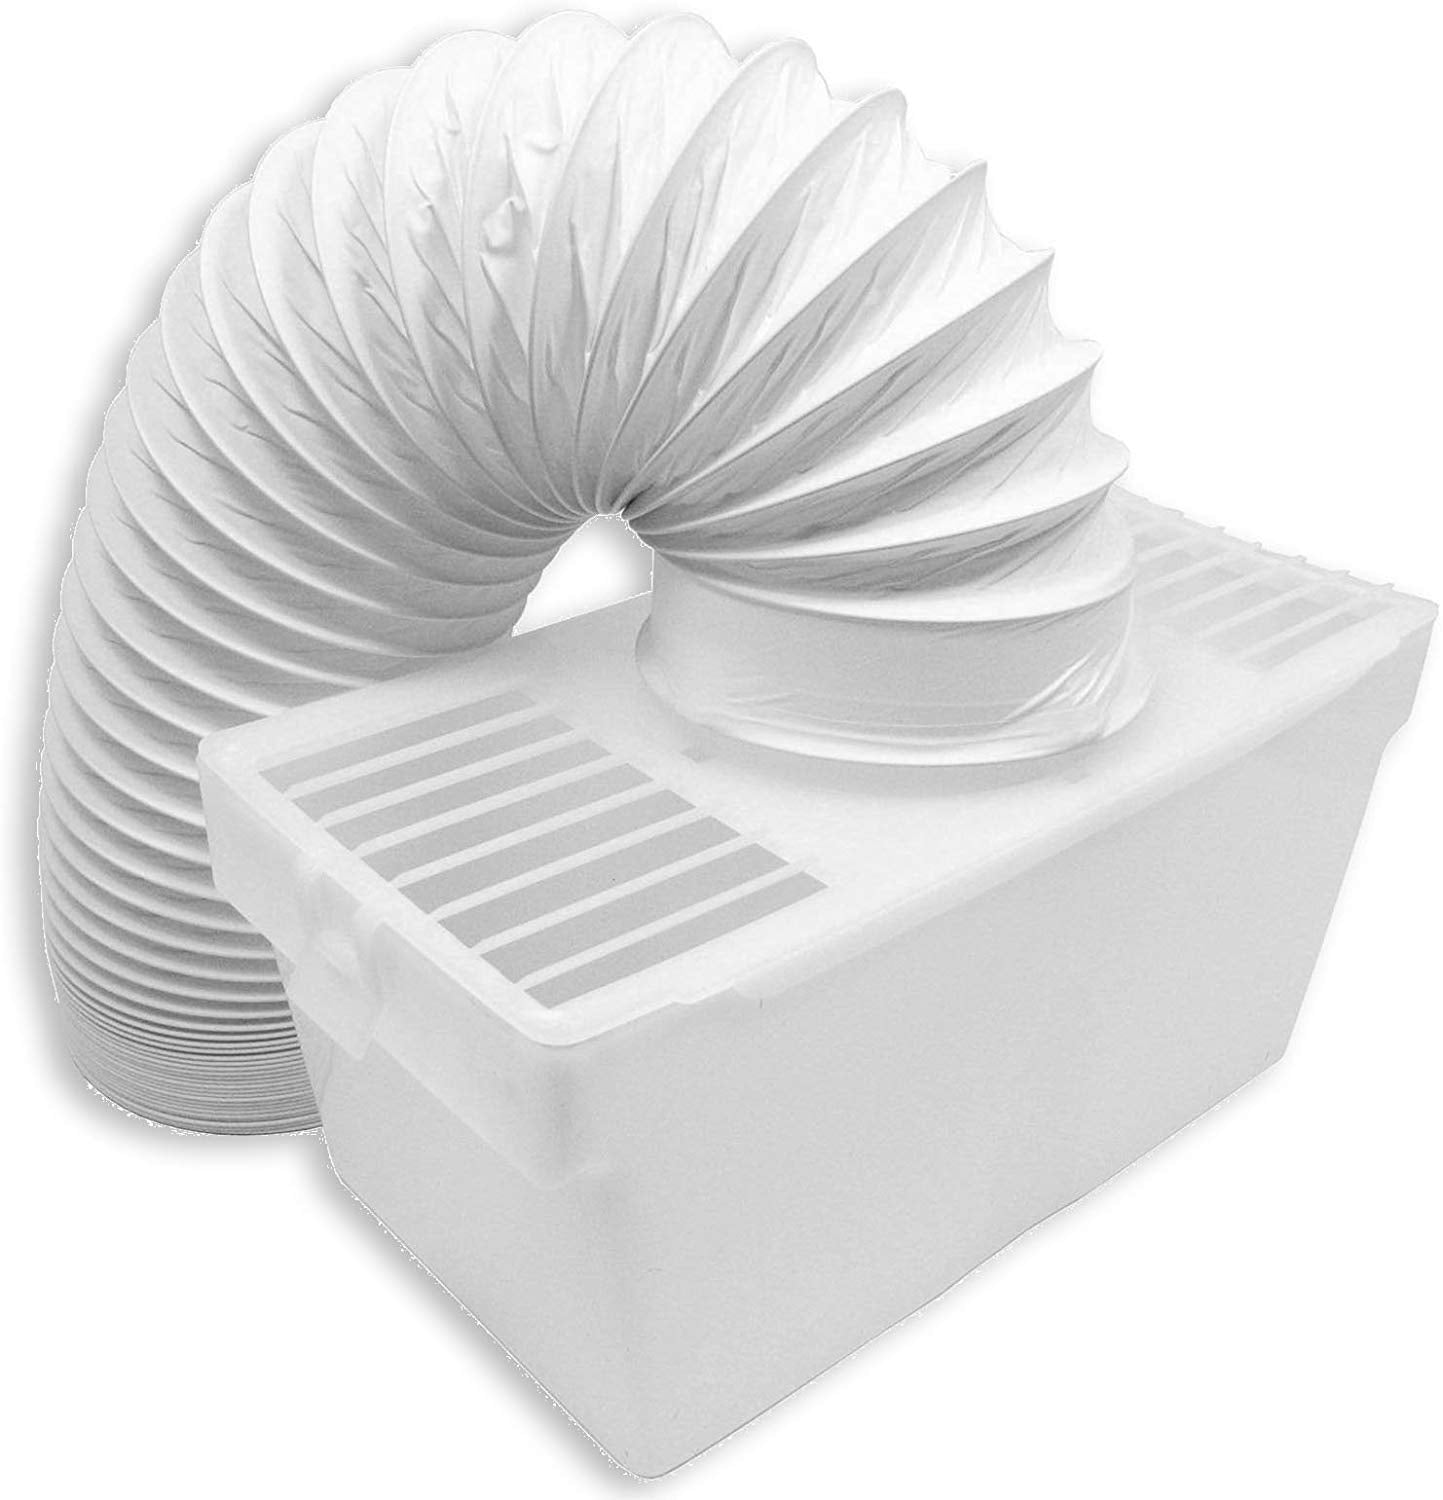 Condenser Vent Box & Hose Kit for Tricity Bendix Vented Tumble Dryers (1.5m / 4" Diameter)